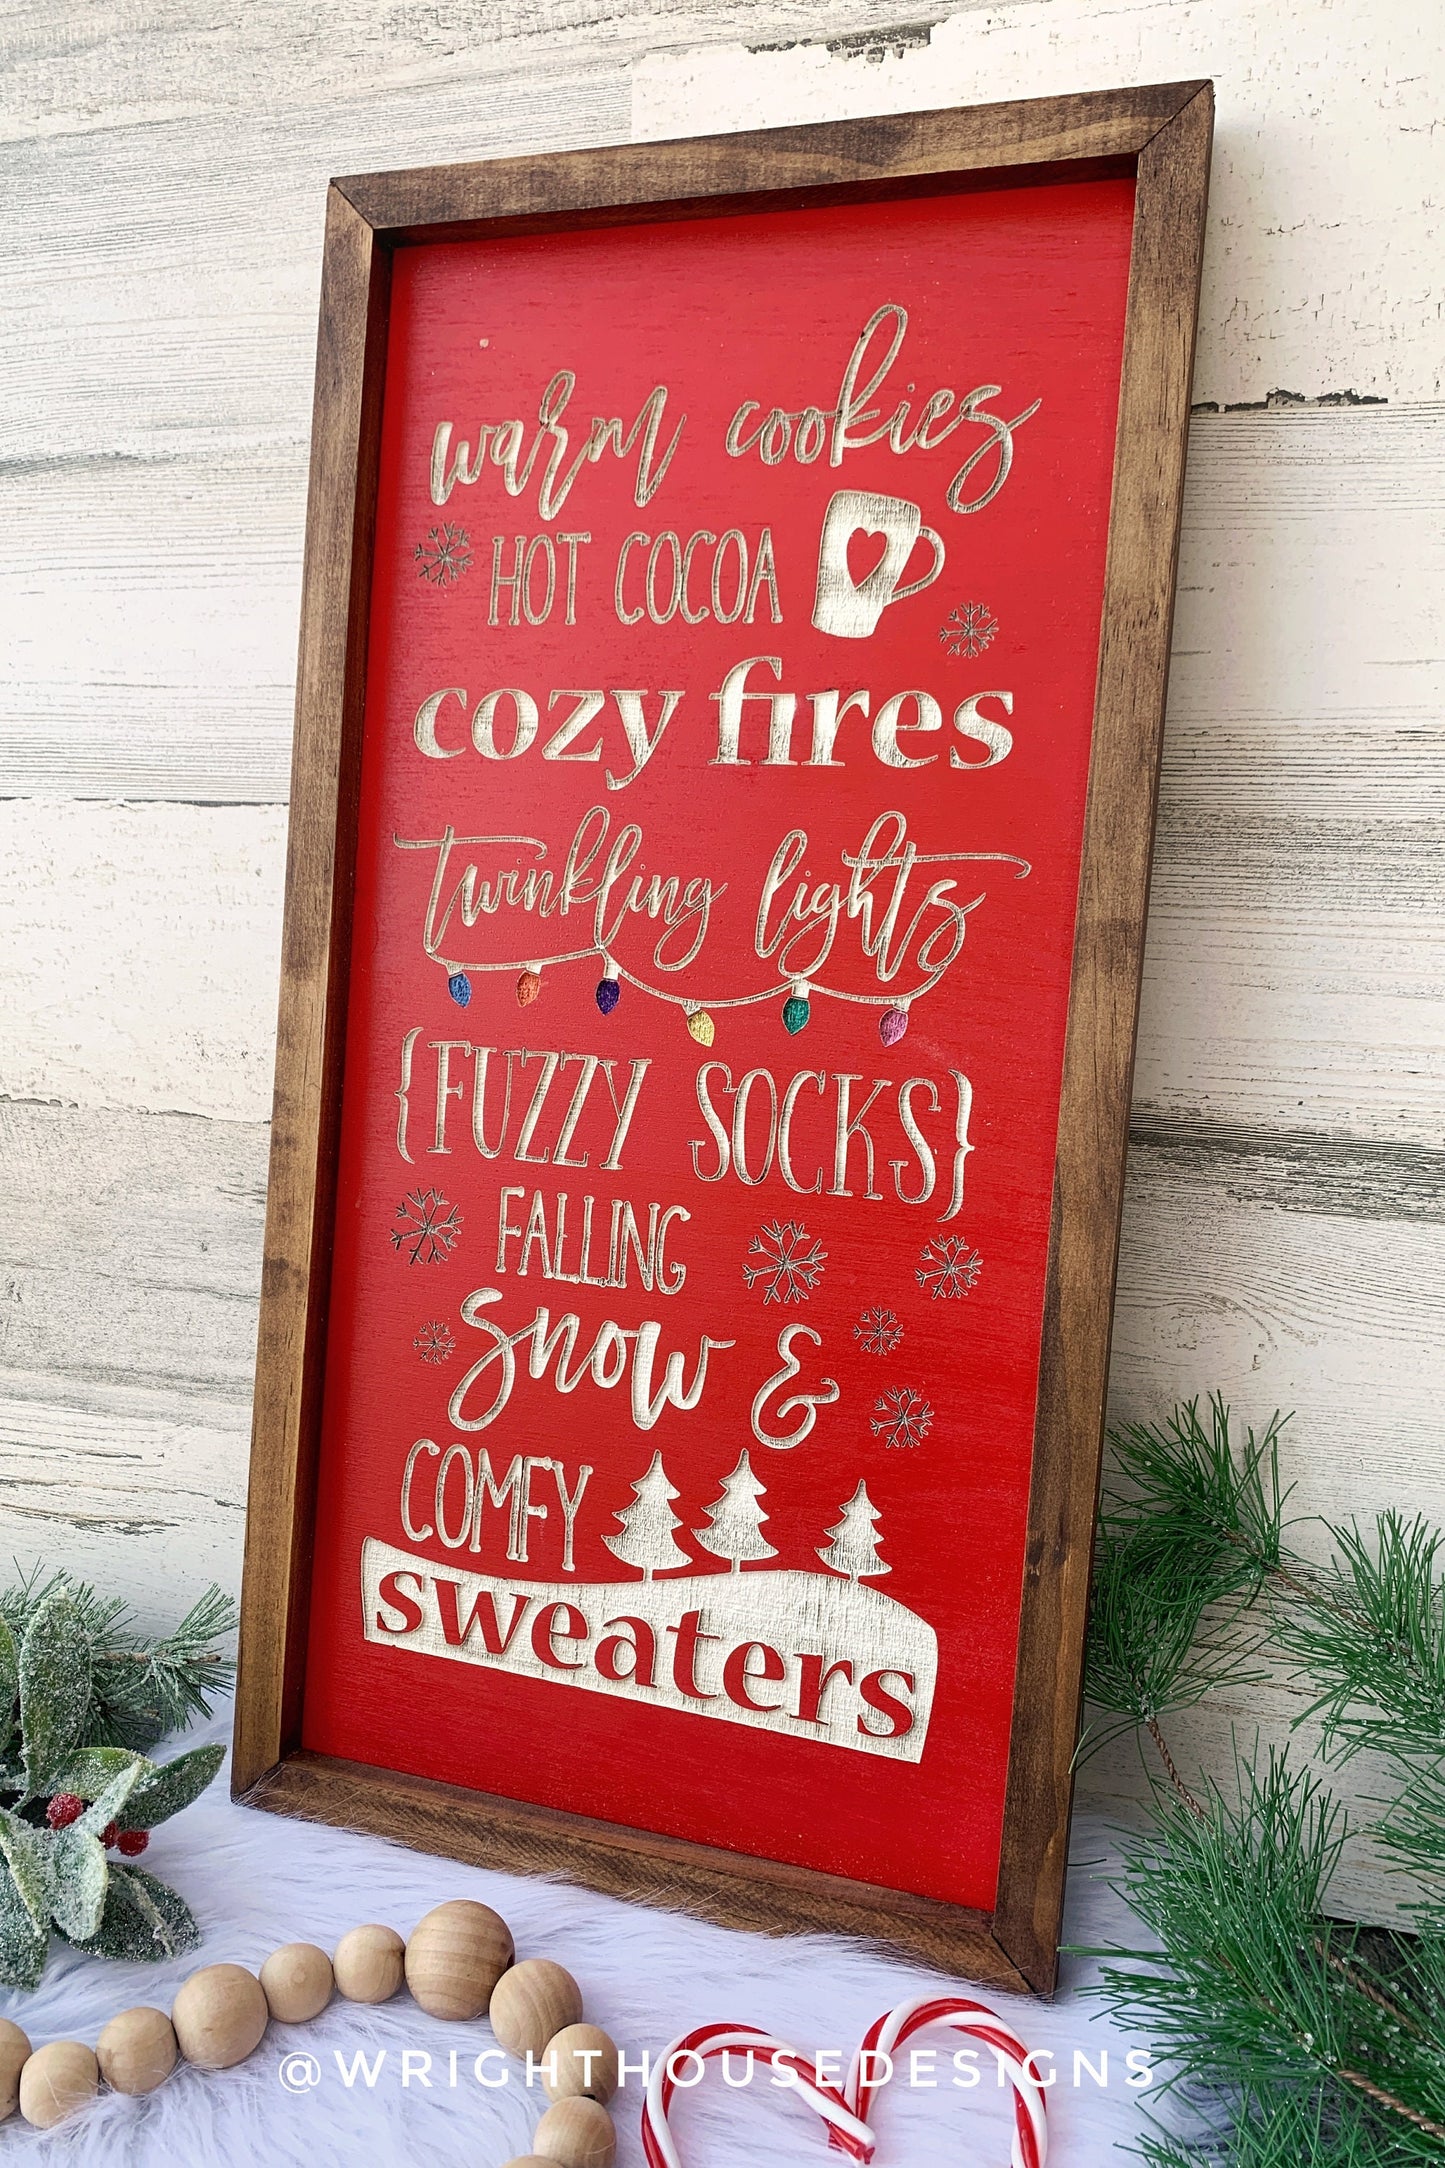 Warm Cookies, Hot Cocoa, Cozy Fires - Winter Bucket List - Cozy Christmas Coffee Bar Sign - Seasonal Home Decor - Festive Holiday Wall Art